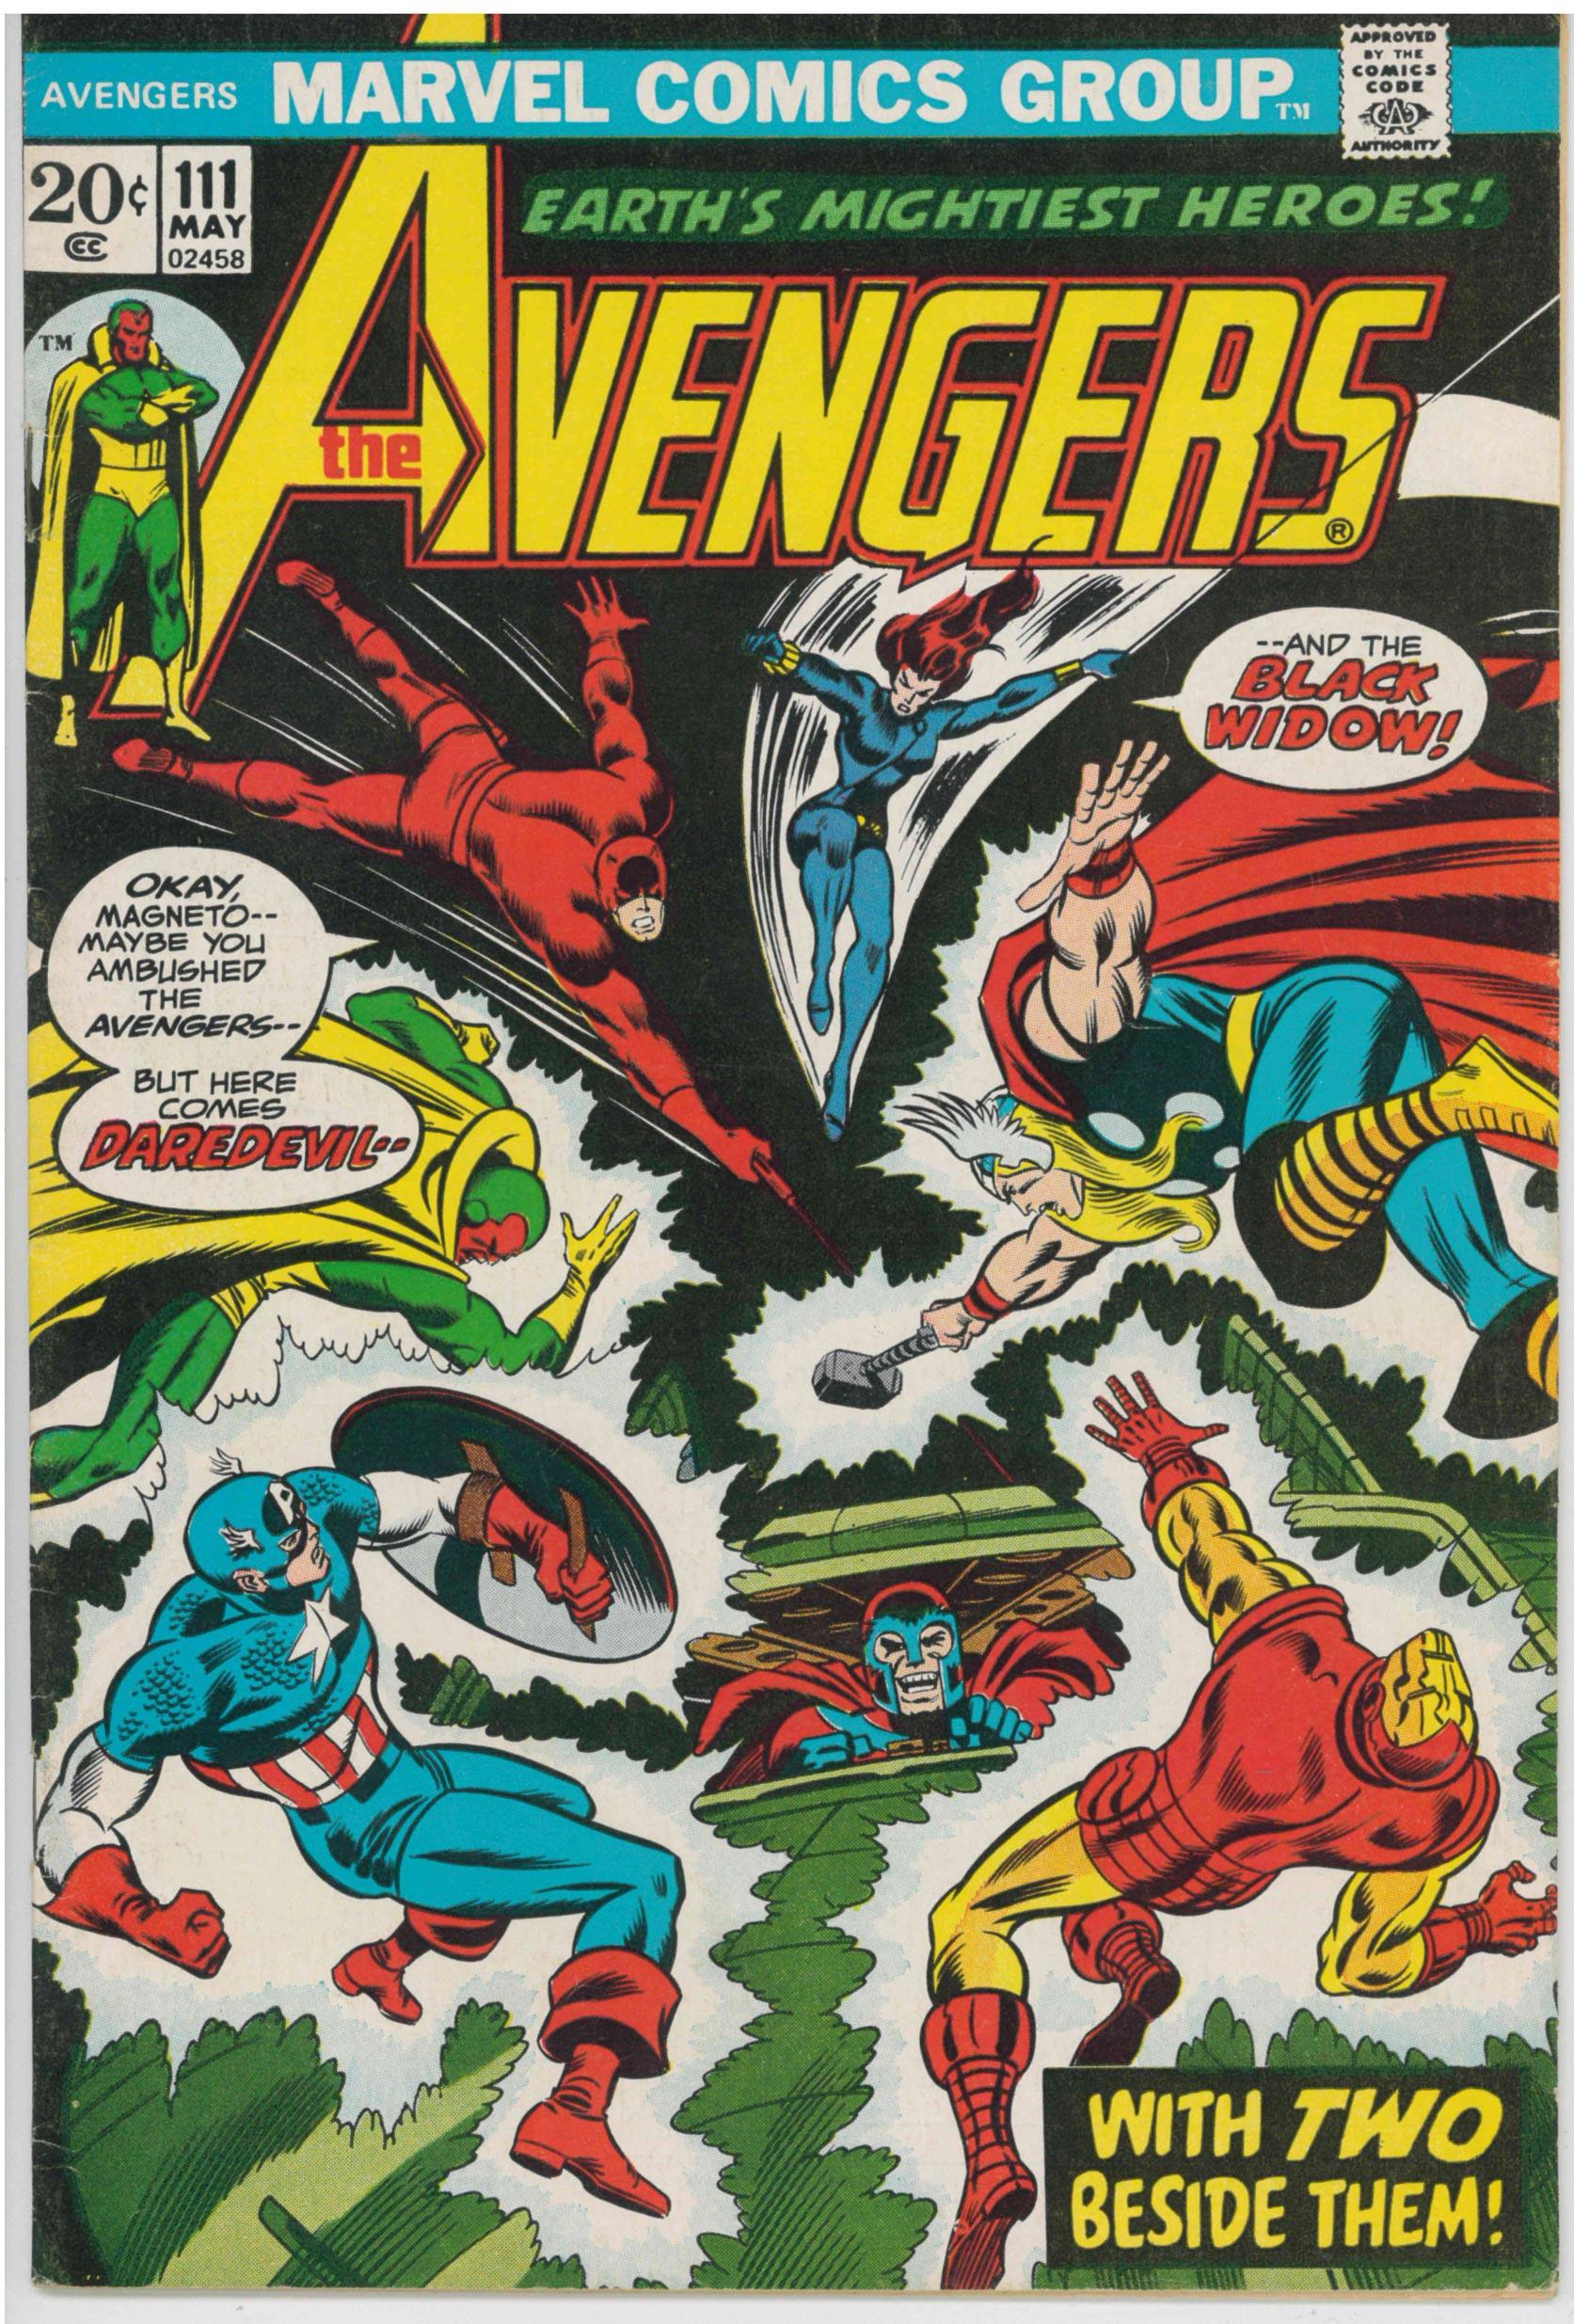 AVENGERS (1963) #111 (FN/VF) - Kings Comics